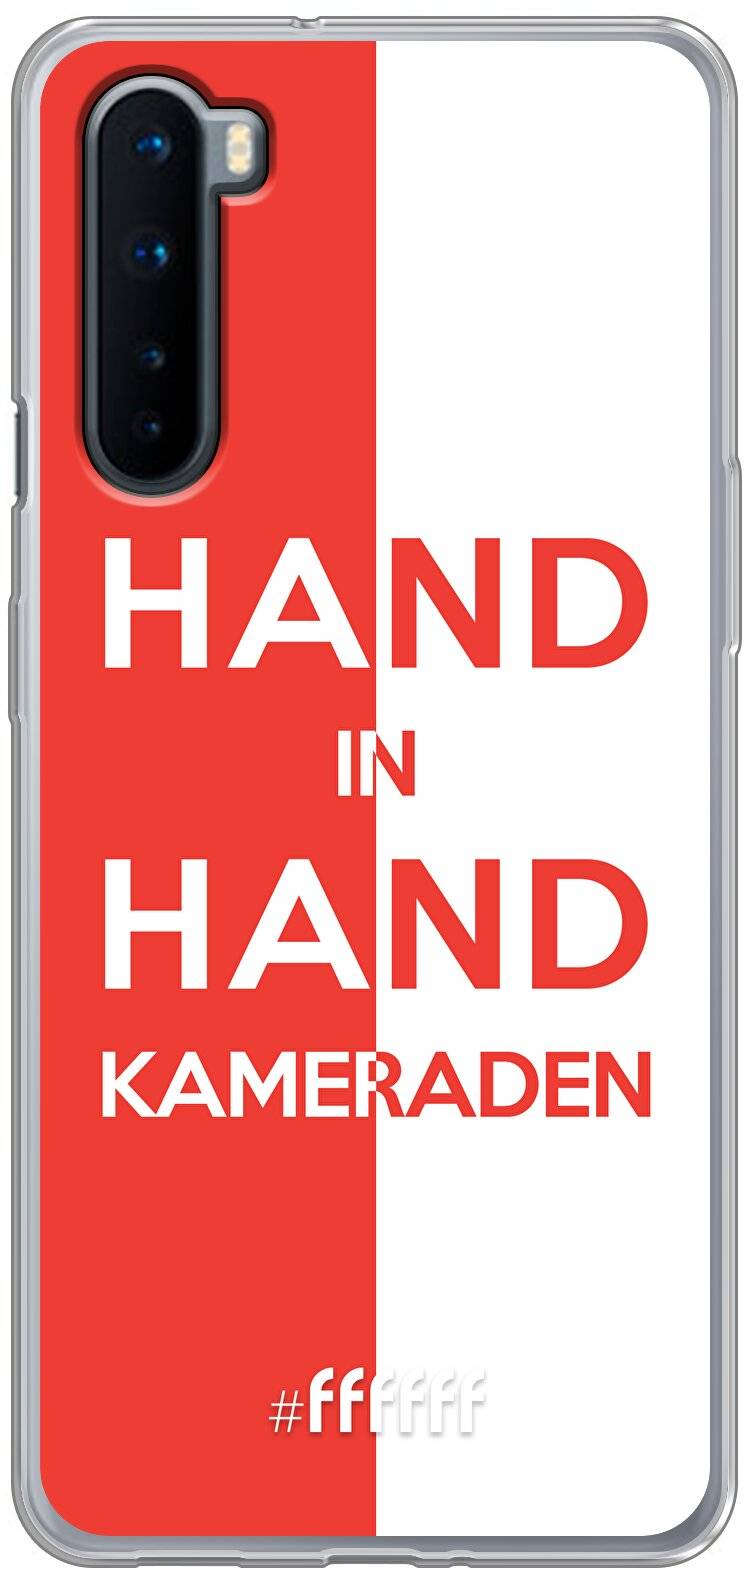 Feyenoord - Hand in hand, kameraden Nord